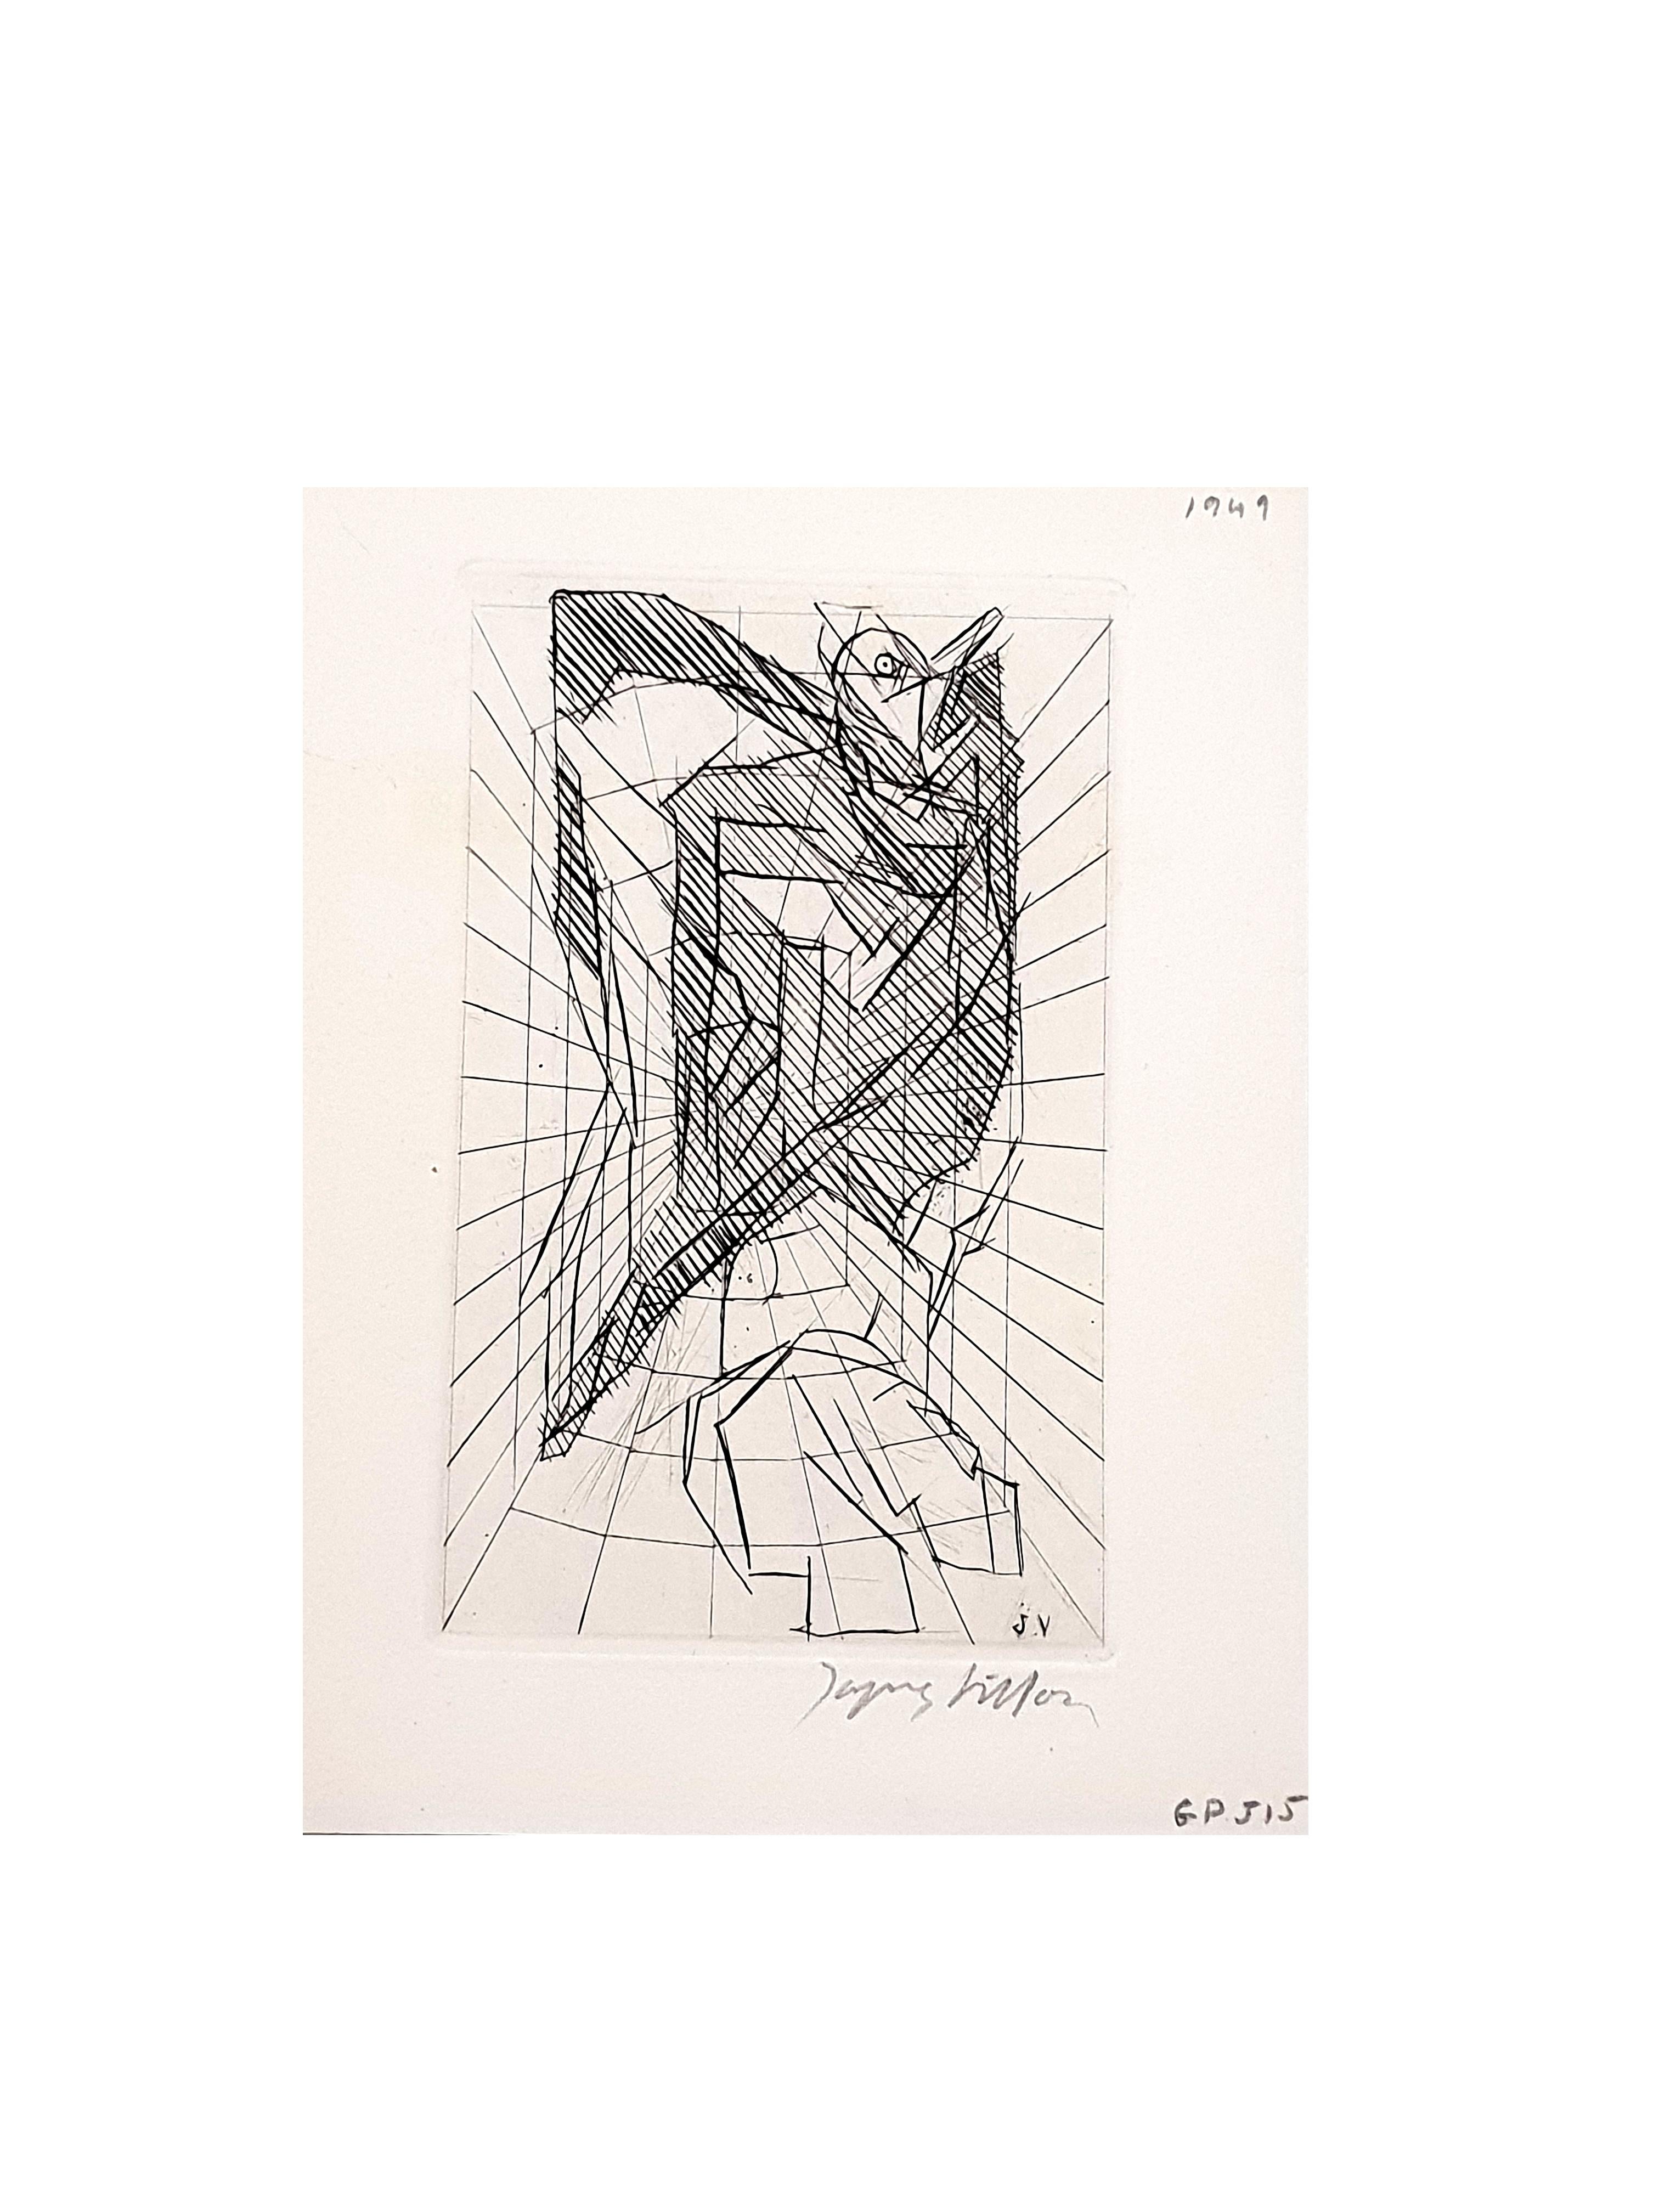 Jacques Villon - Cubist Cavern - Original Etching
1949
Signed in pencil
Dimensions : 12.5 x 16 cm